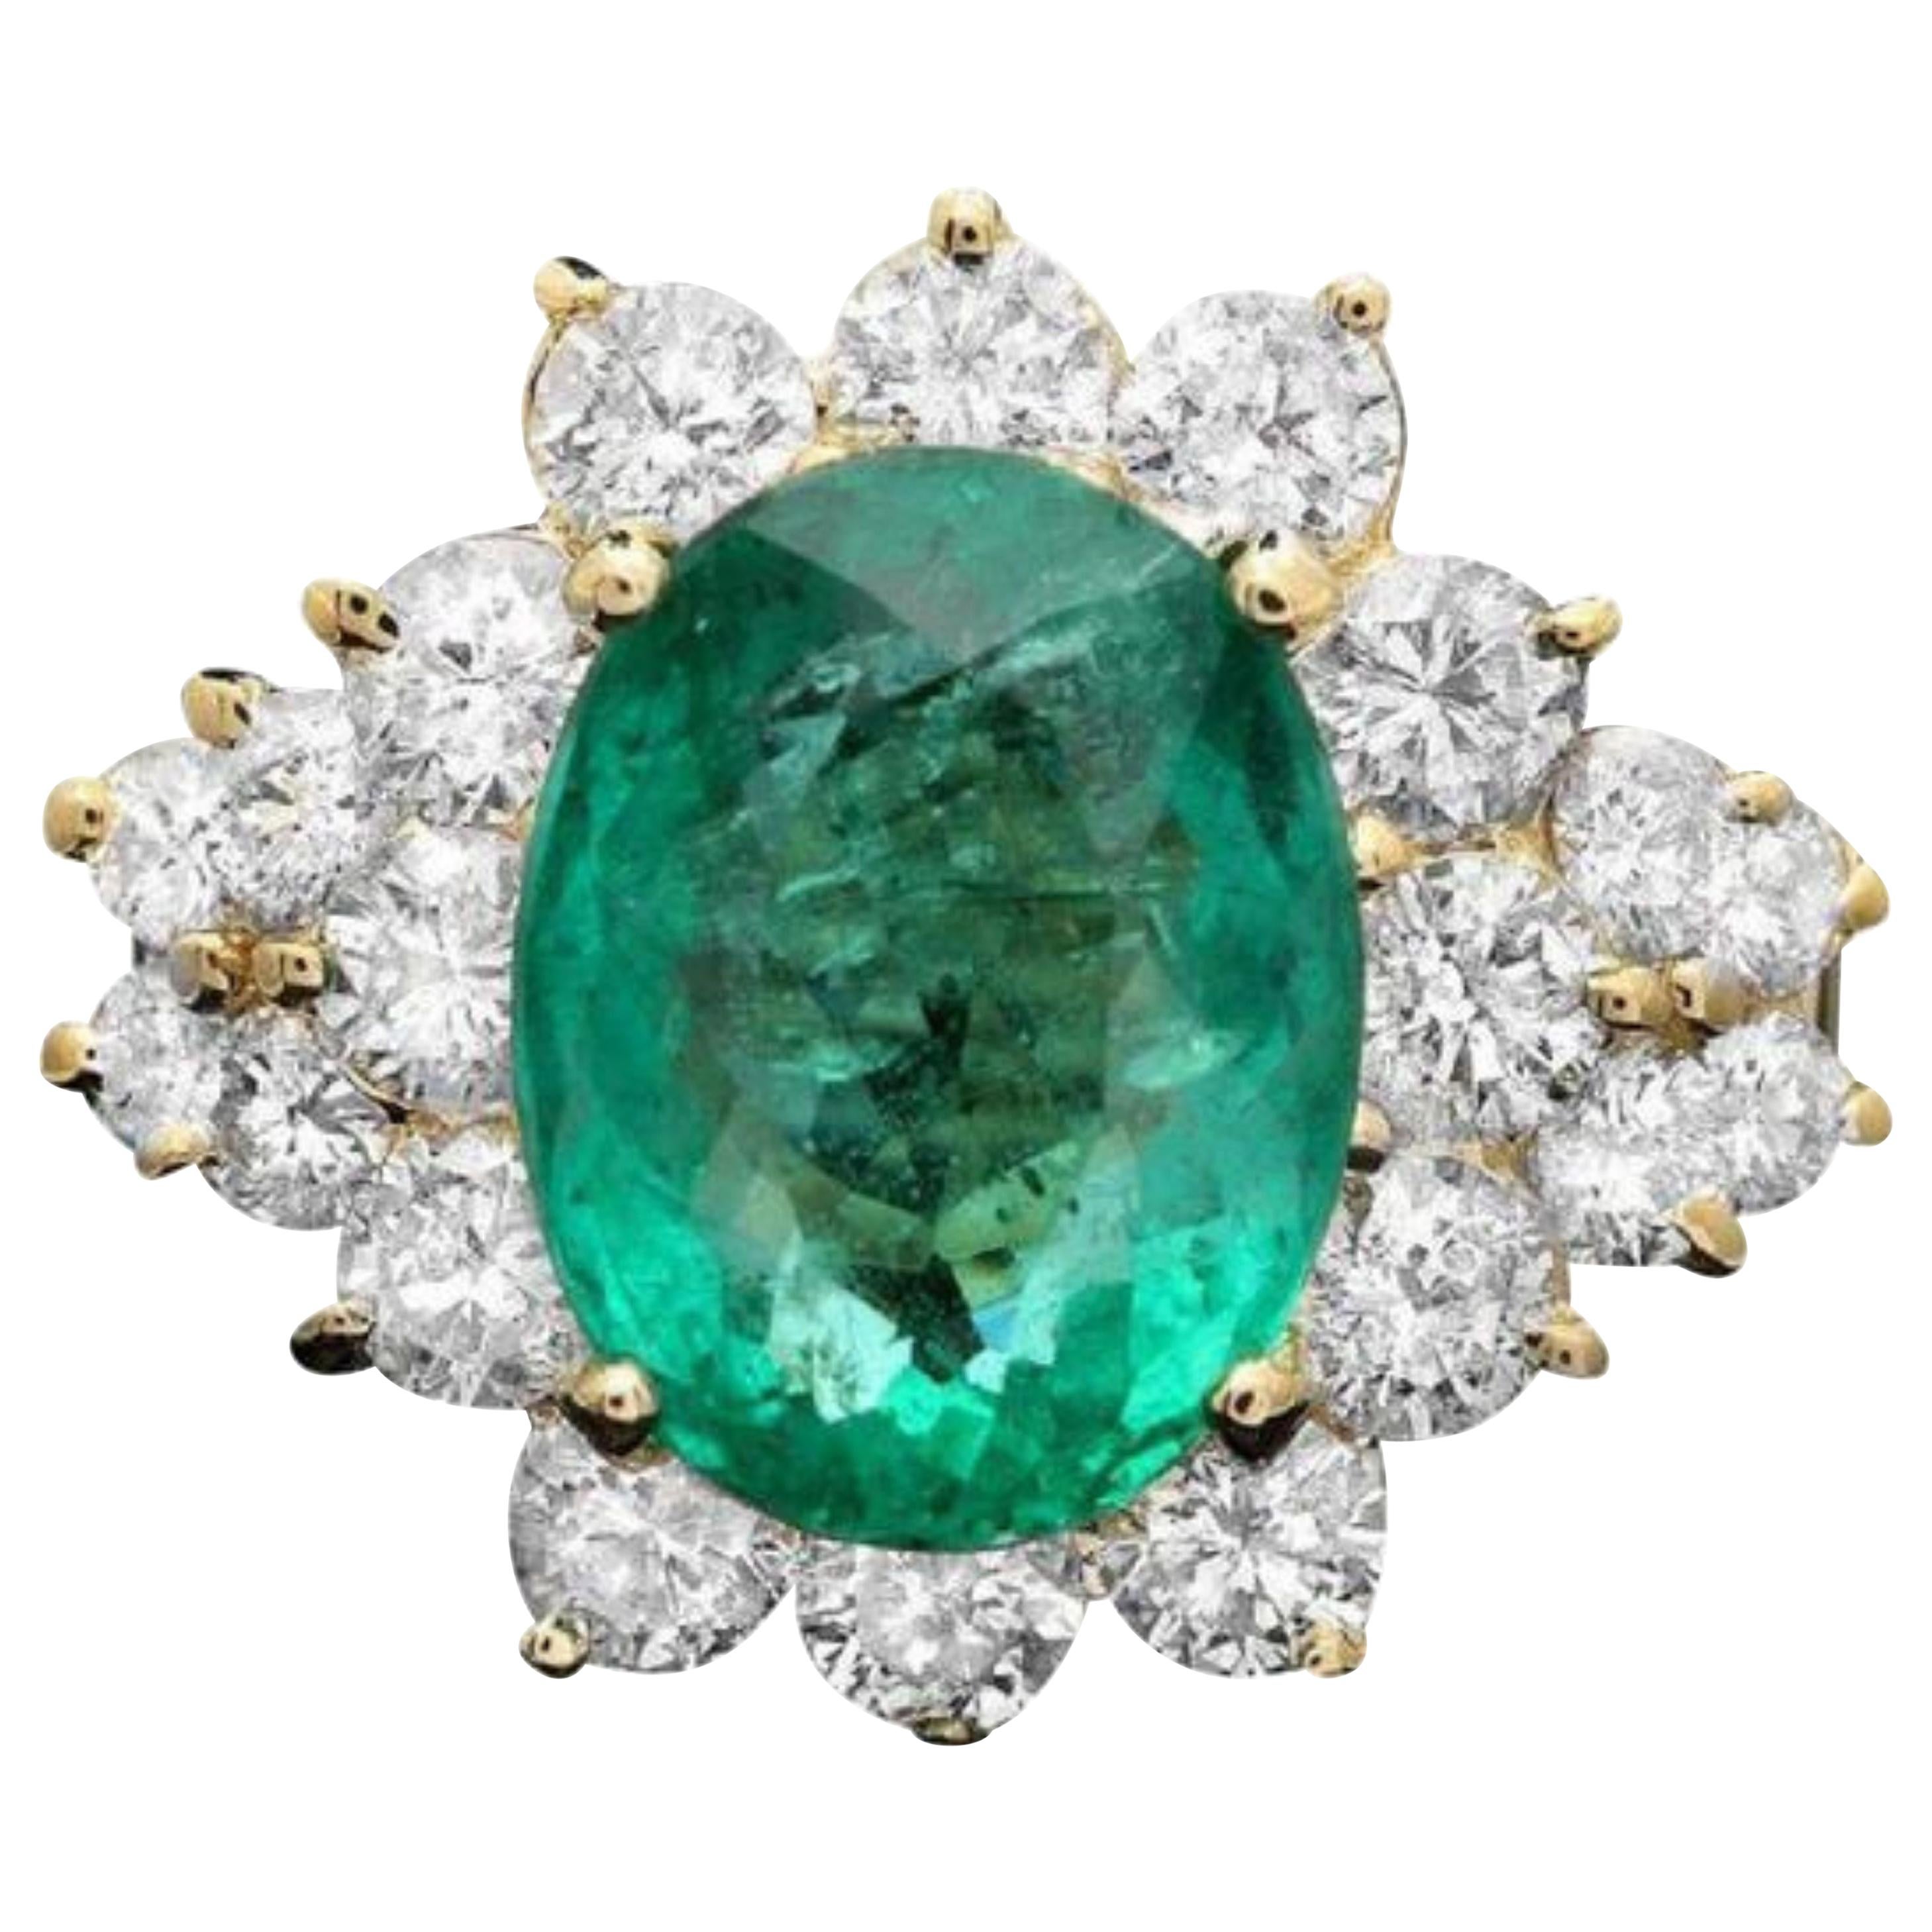 5.90 Carat Natural Emerald and Diamond 14 Karat Solid Yellow Gold Ring